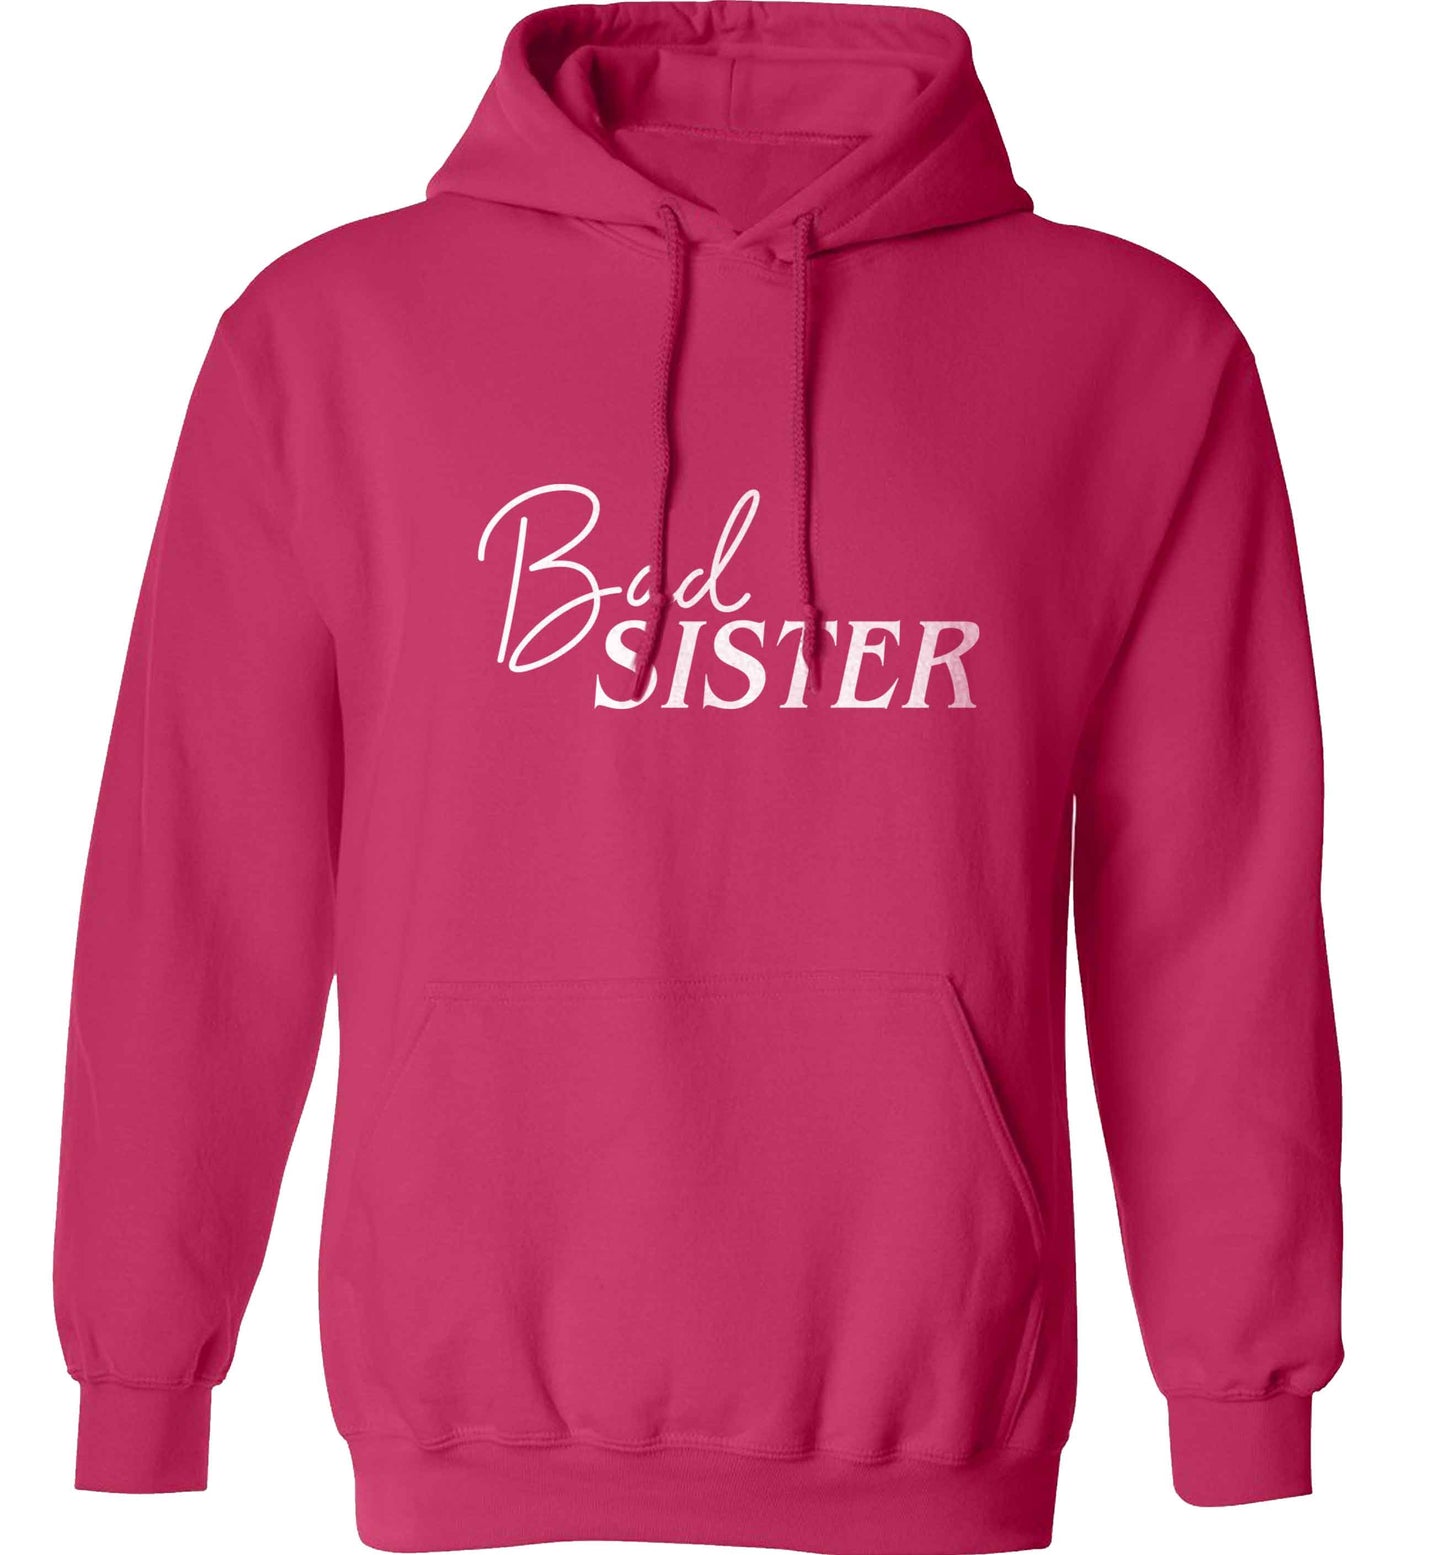 Bad sister adults unisex pink hoodie 2XL